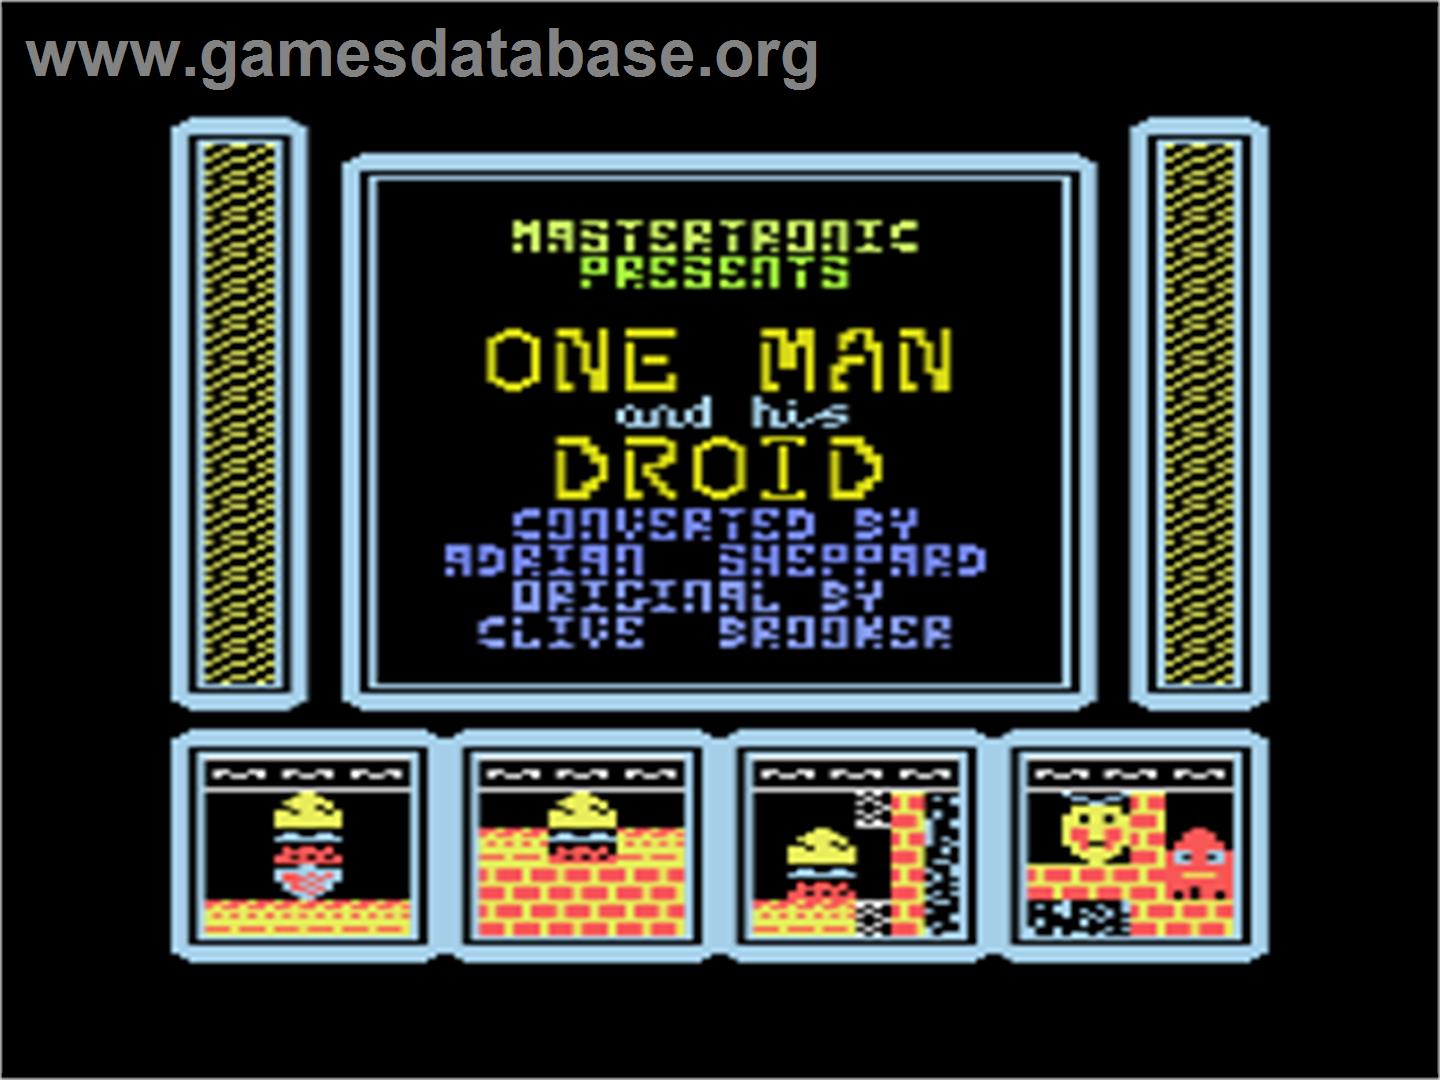 One Man and his Droid - Atari 8-bit - Artwork - Title Screen